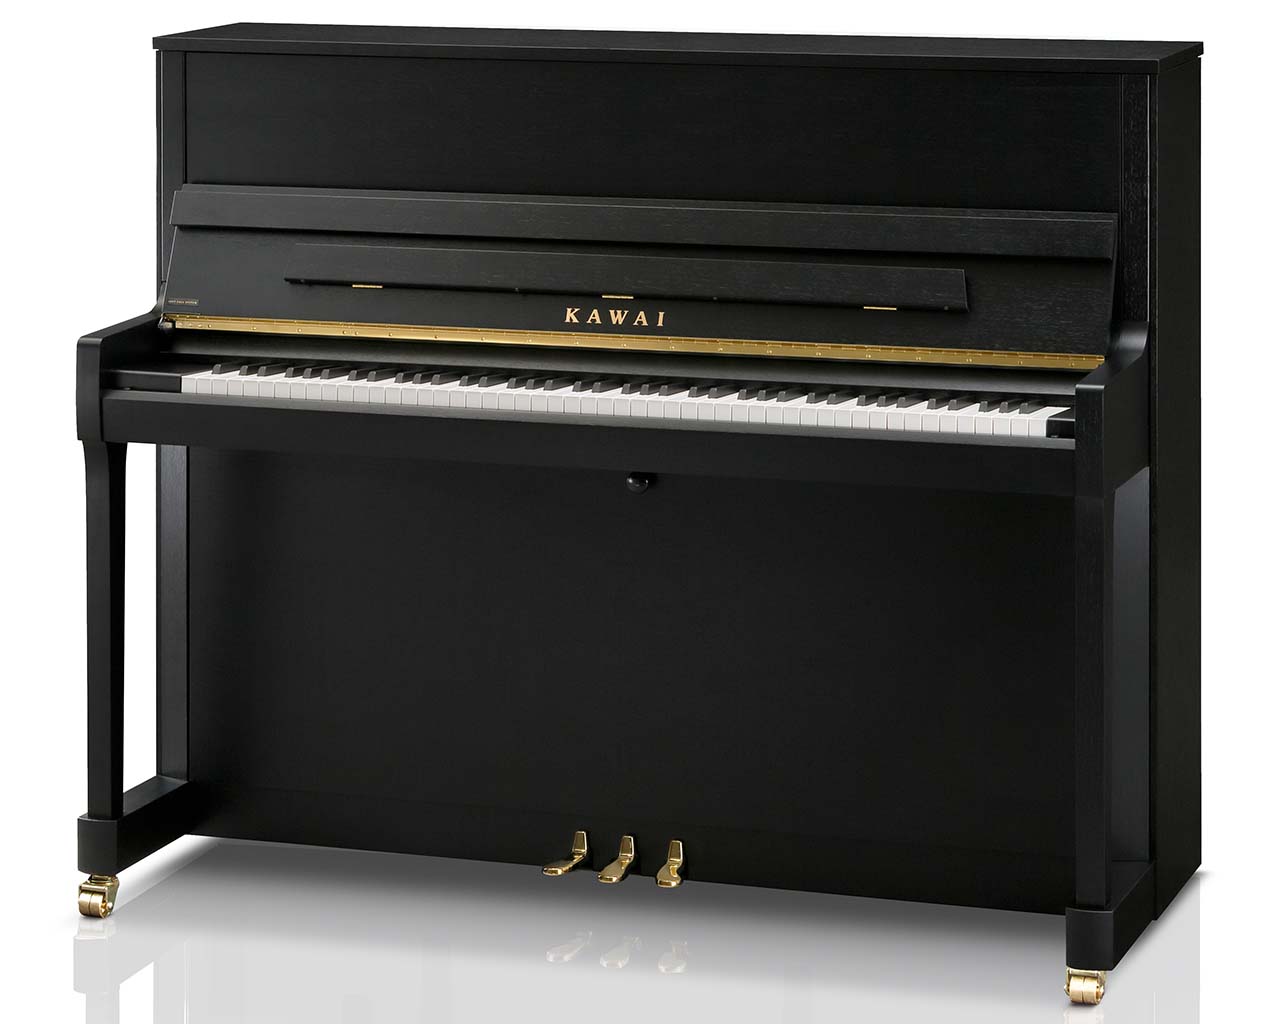 Kawai-E-300-SB-Klavier-schwarz-Pianohaus-Filipski